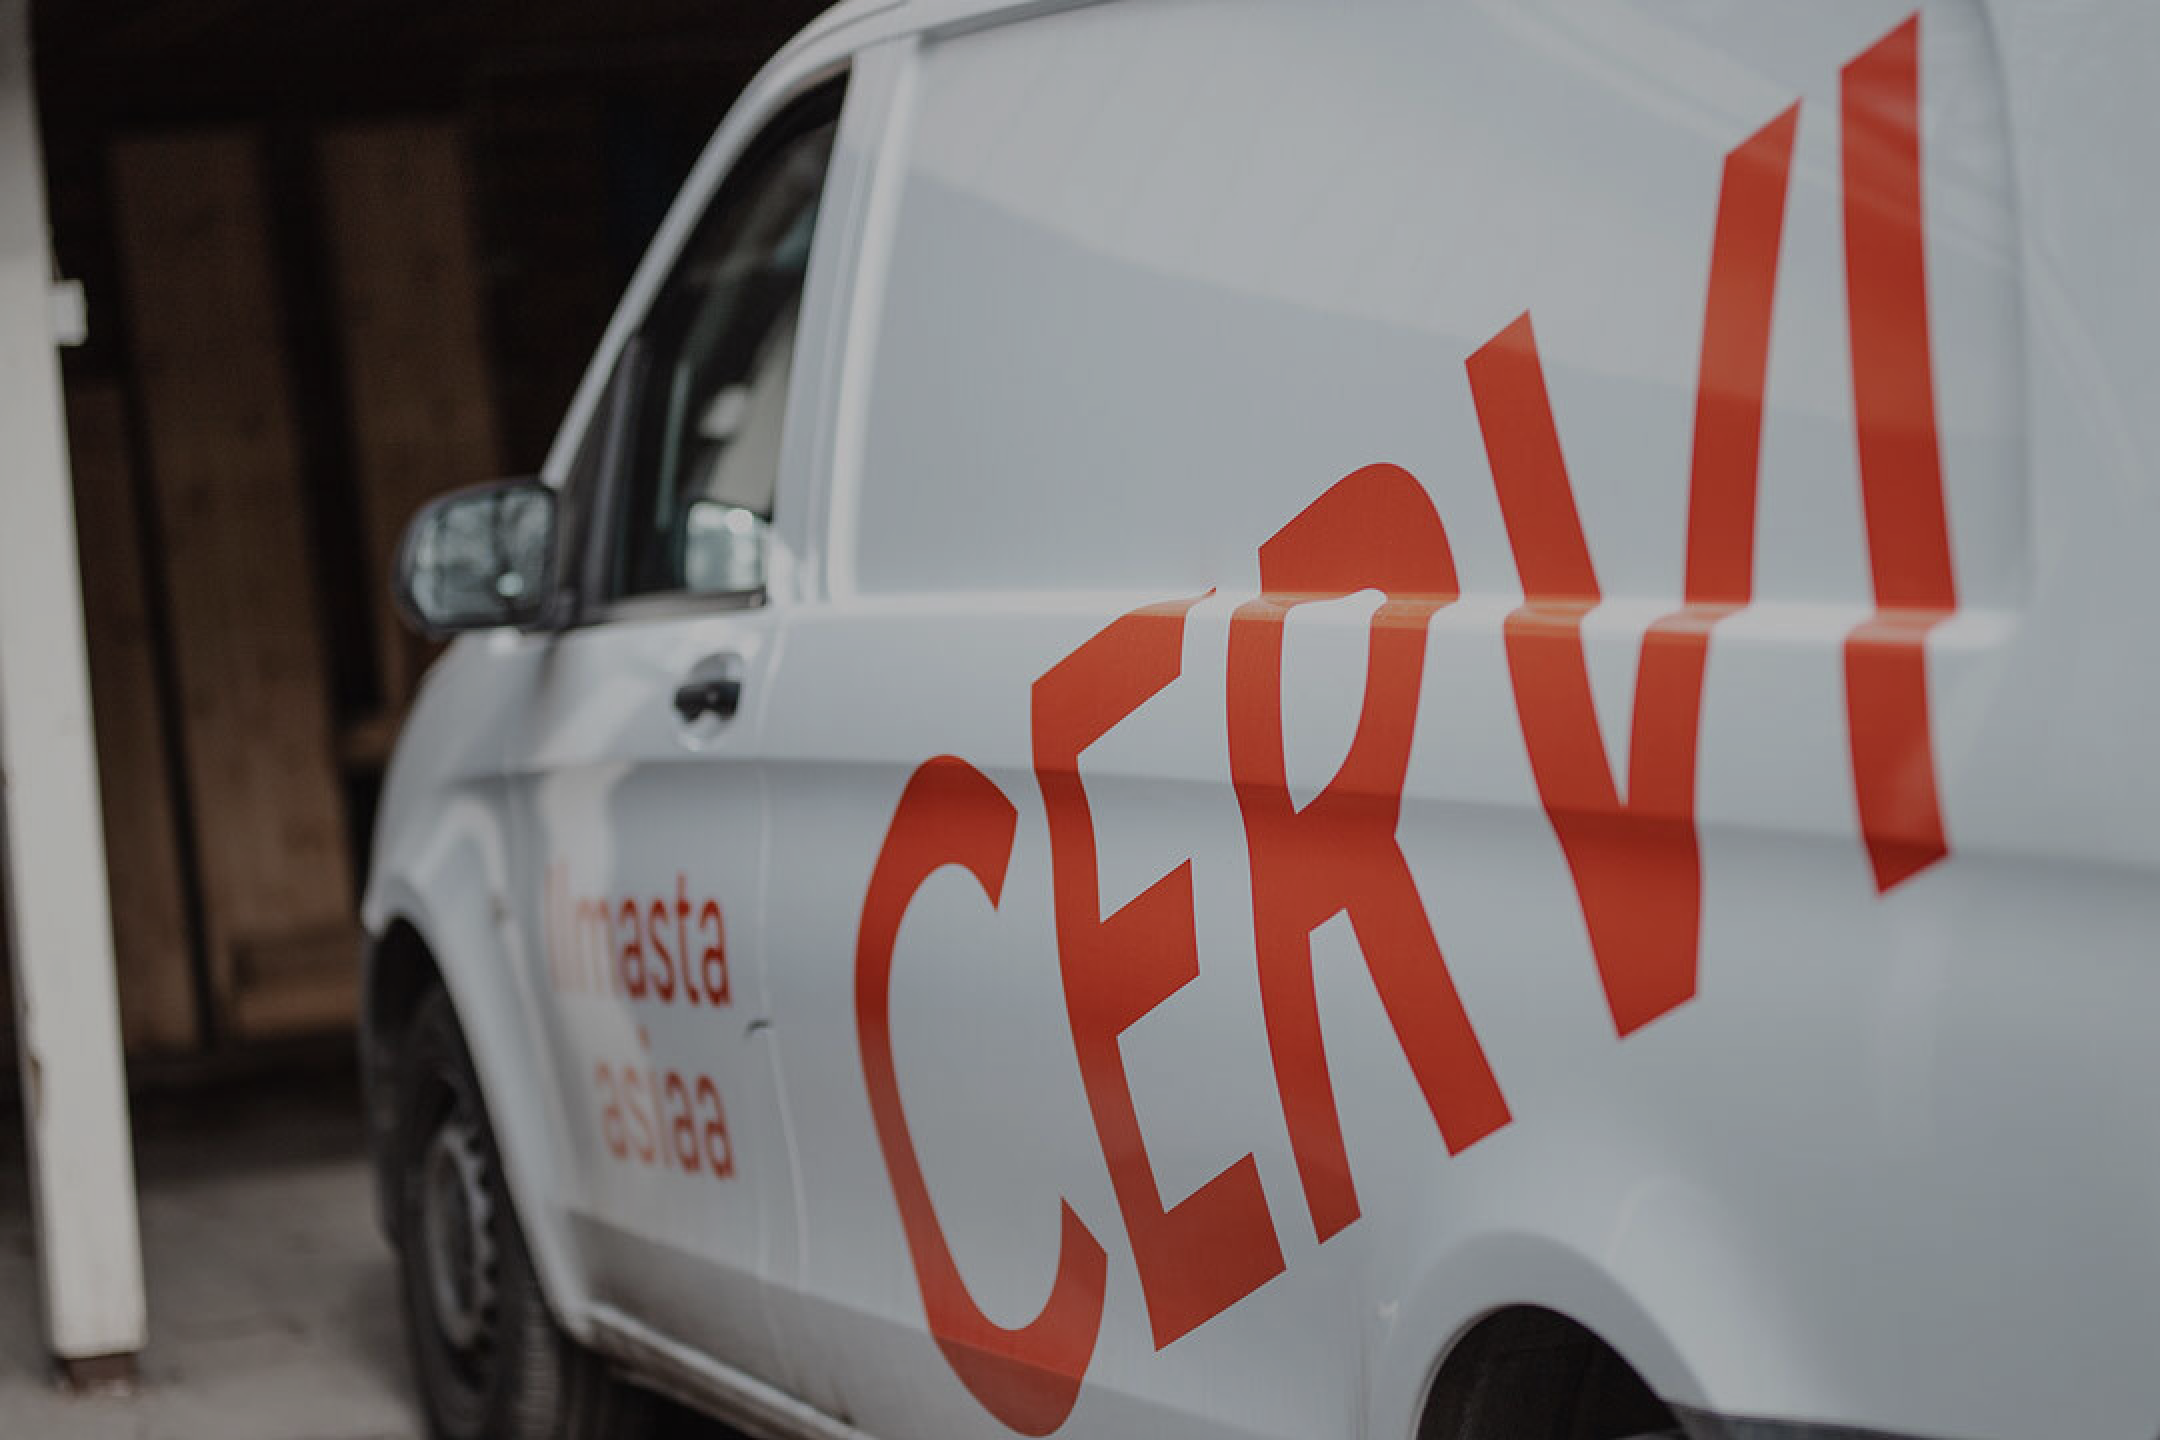 White van with logo of Cervi.